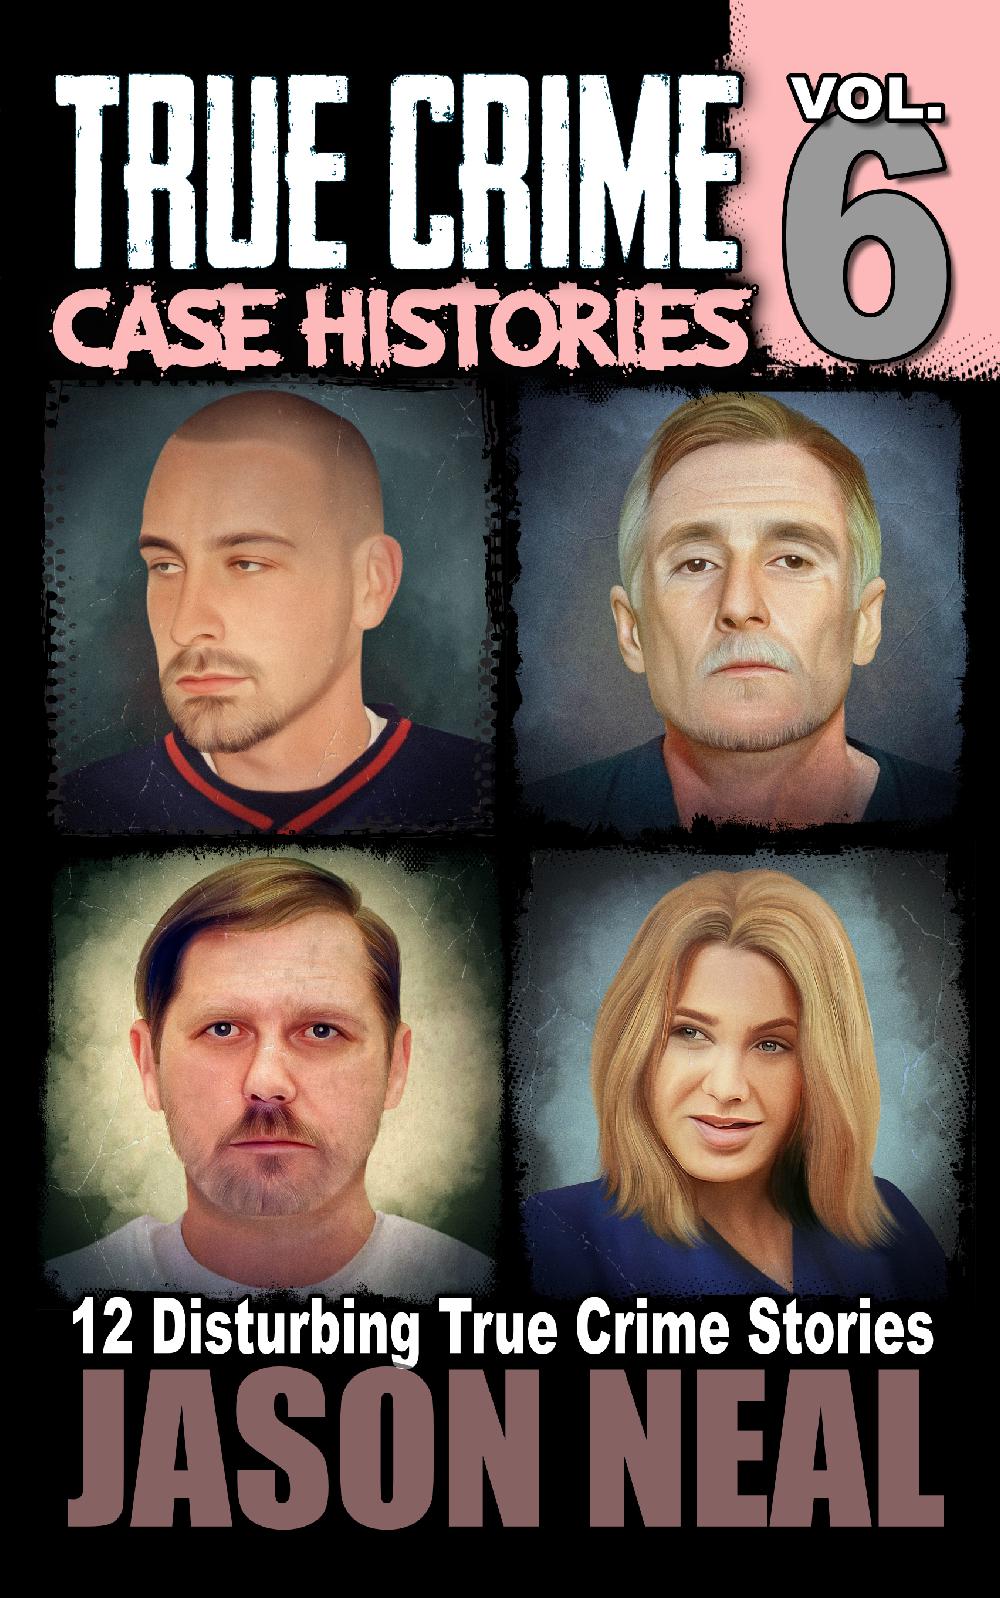 True Crime Case Histories - Volume 6 (PAPERBACK)